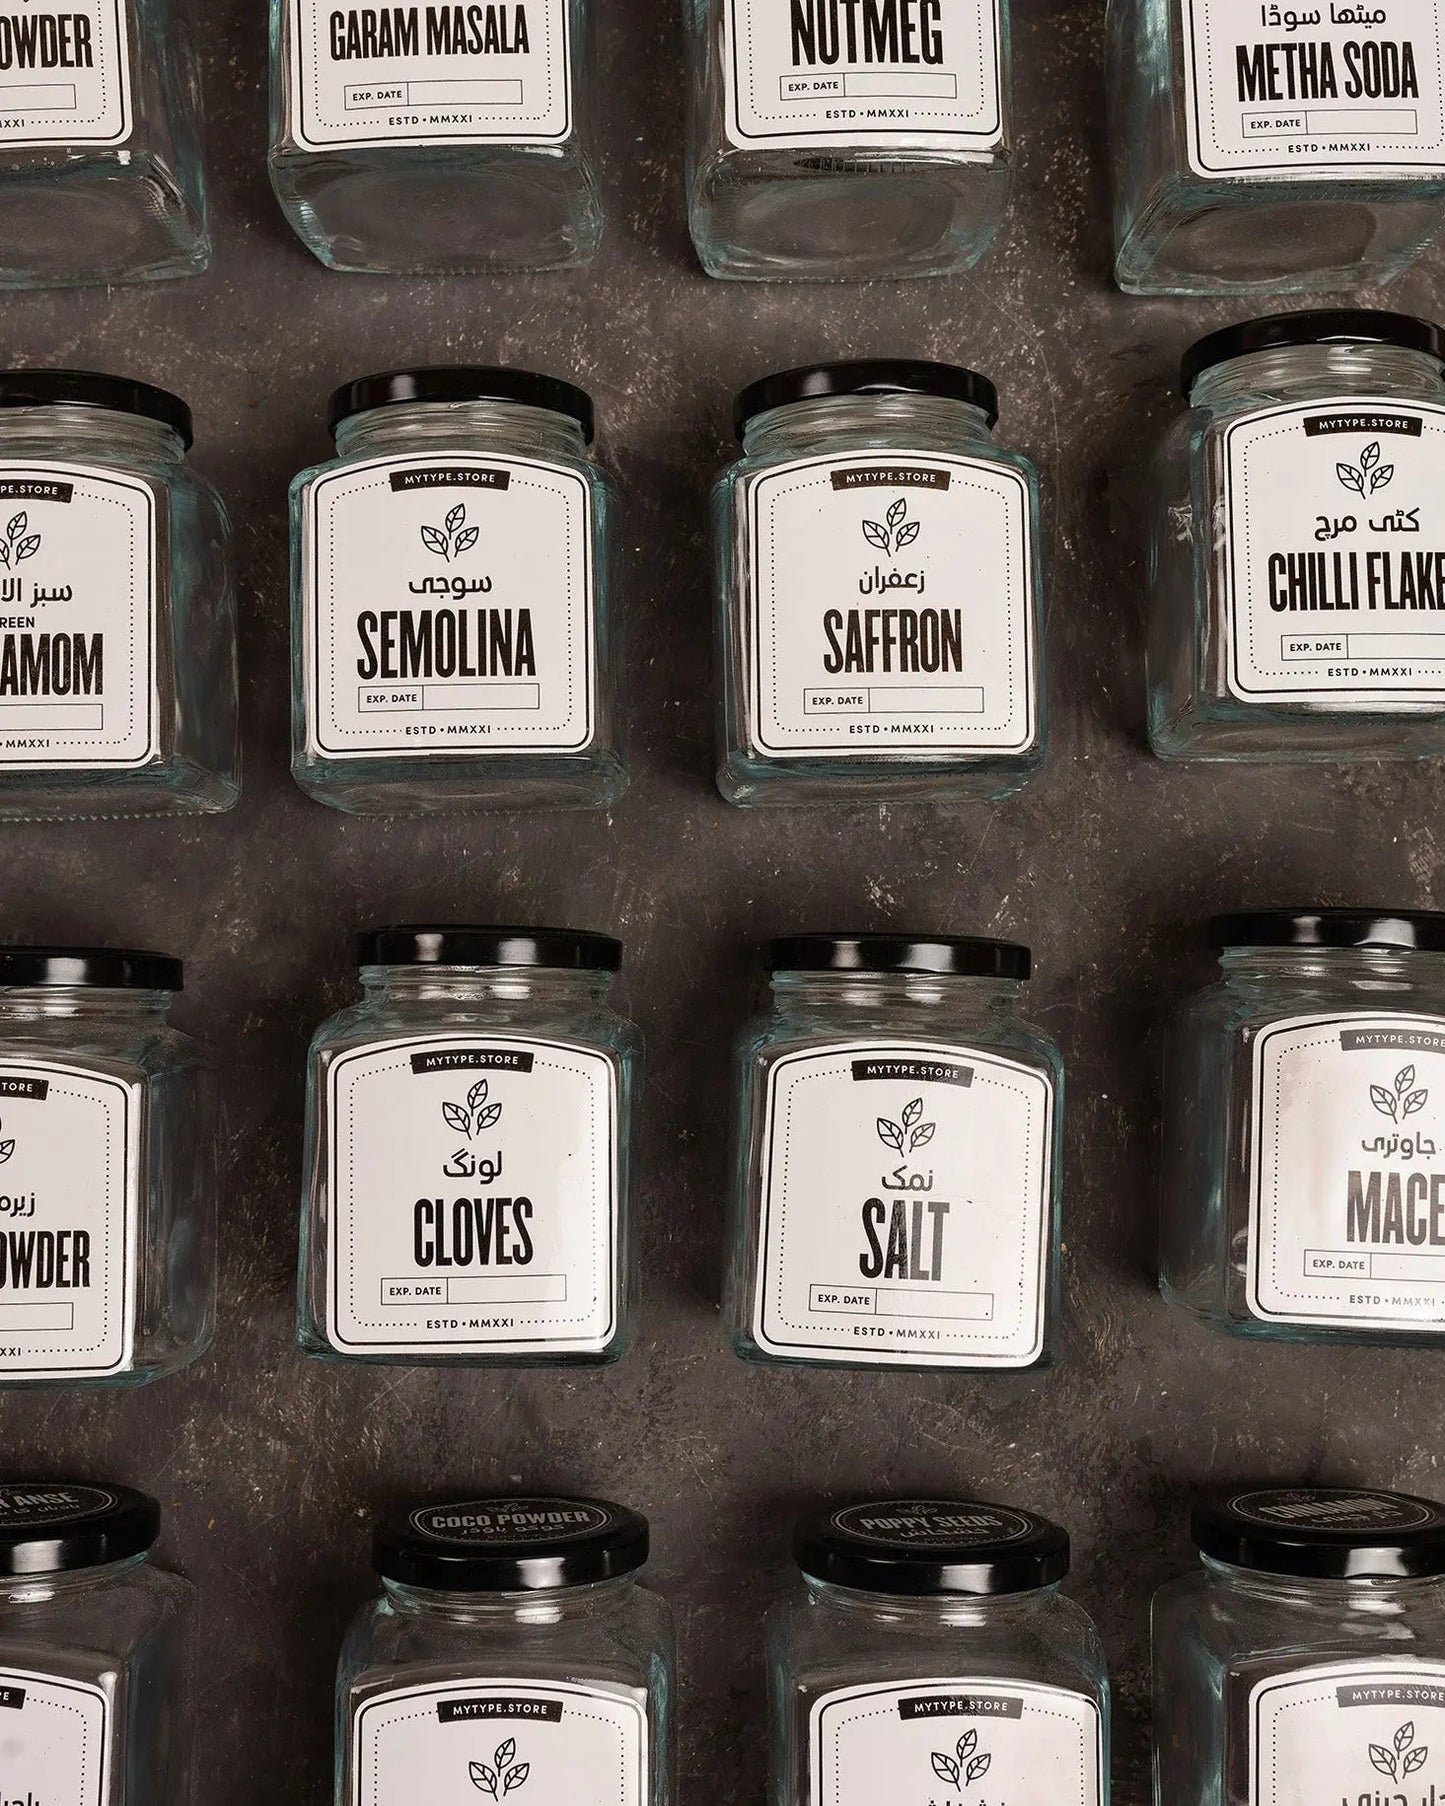 The Partiologist: Spice Jar Labels